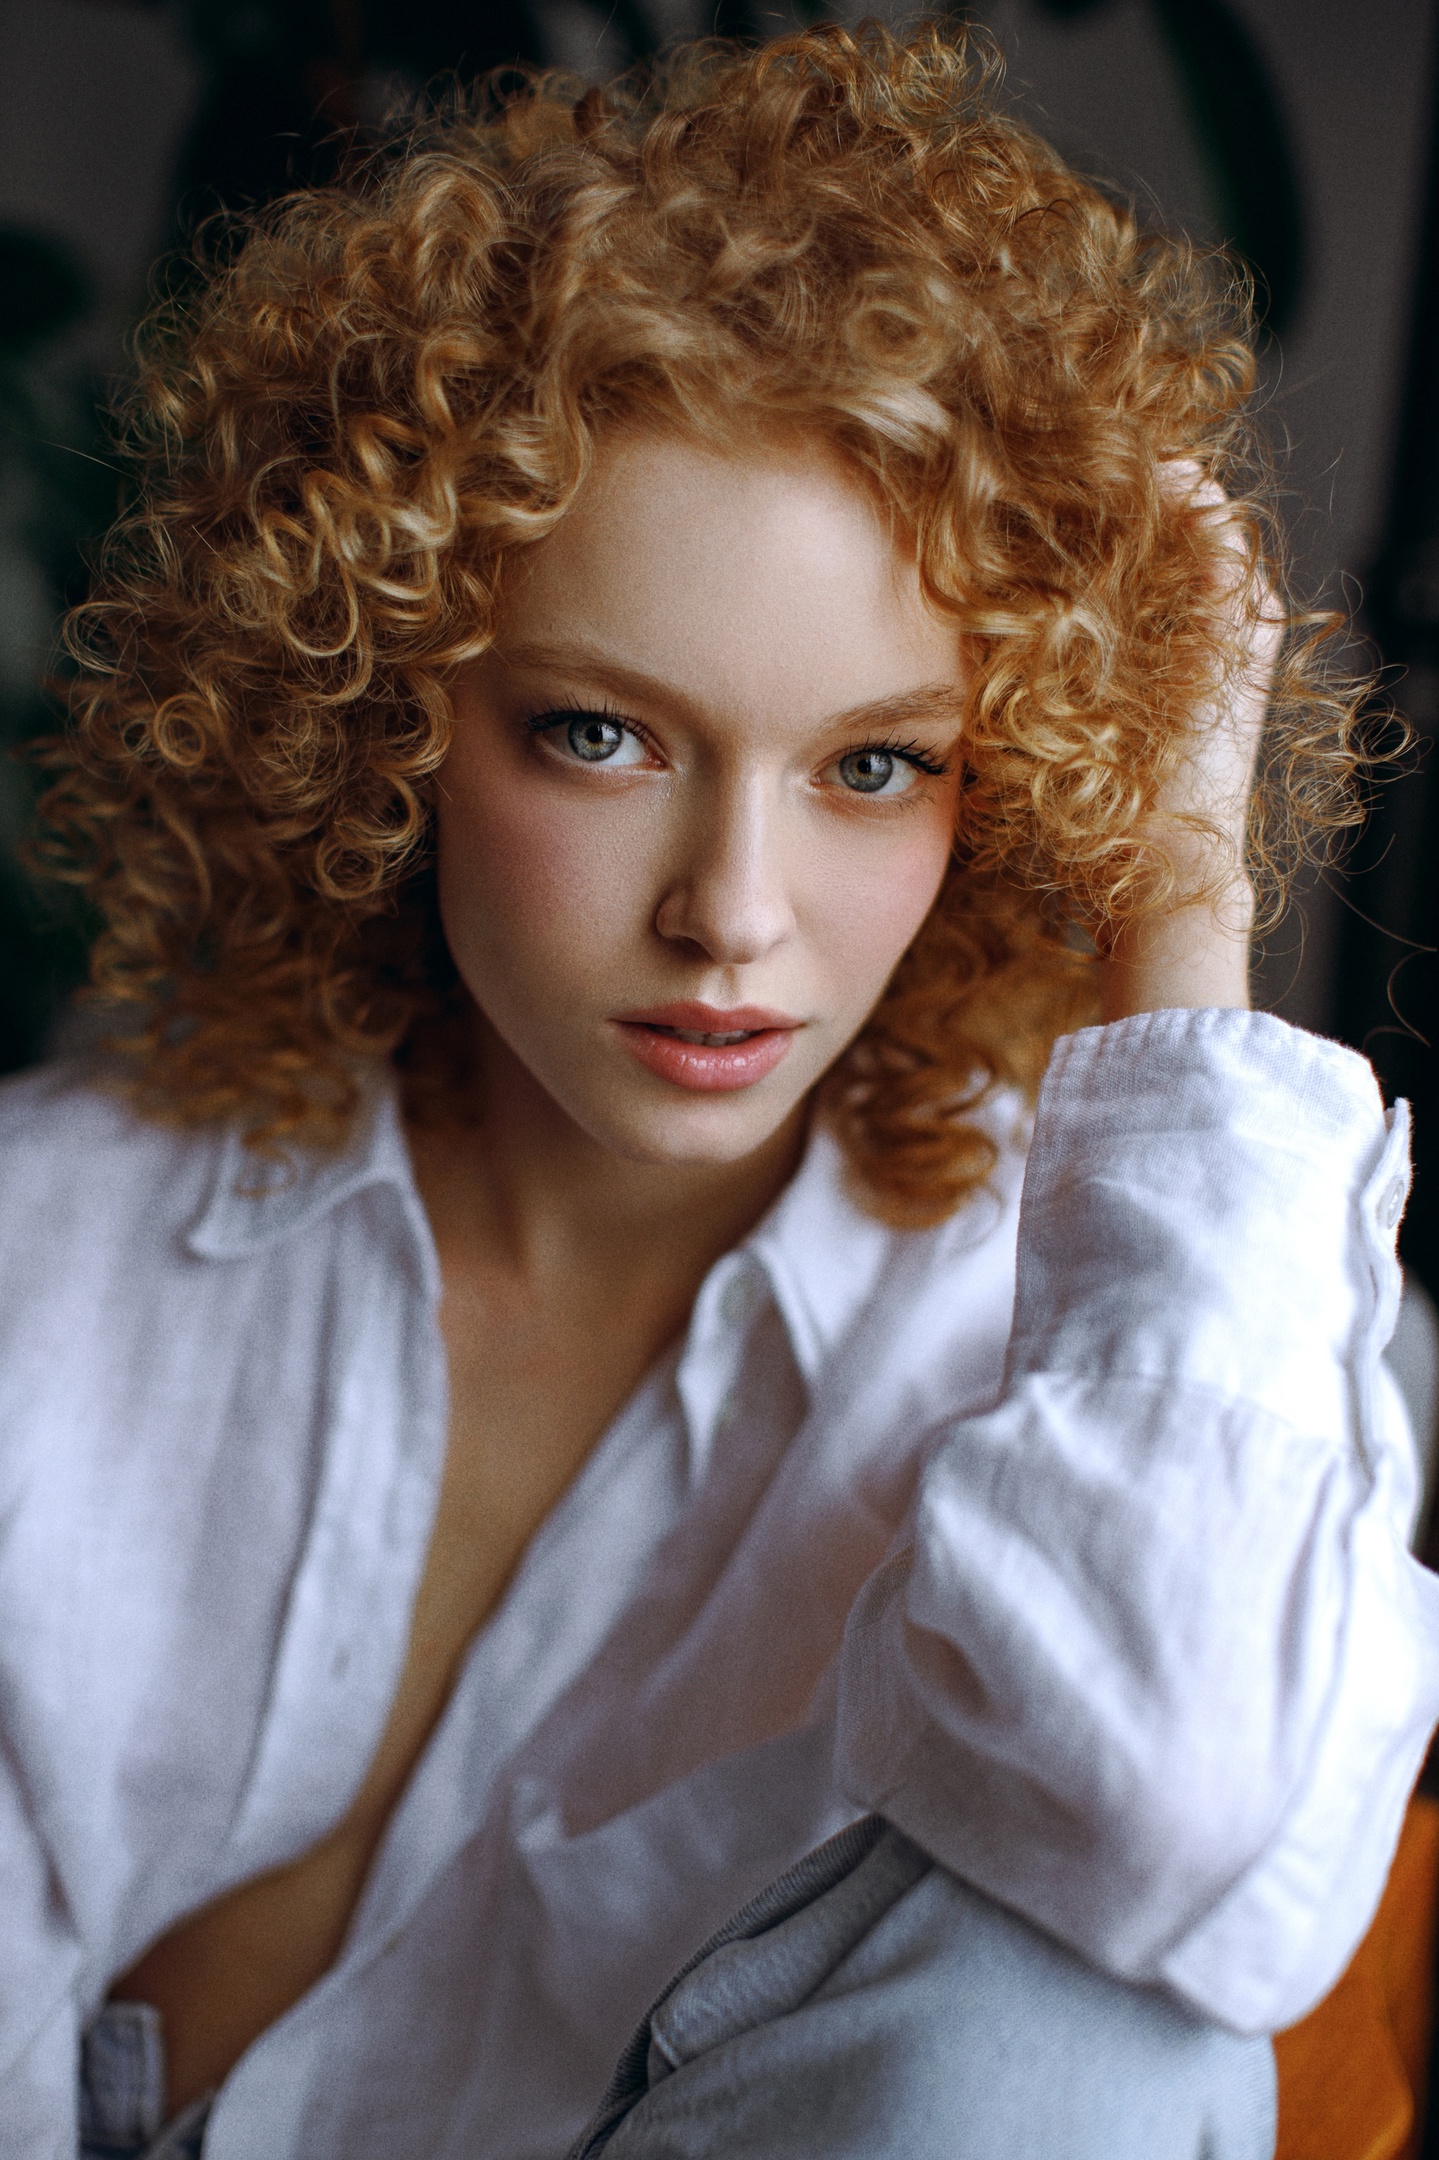 Evgeniy Potanin Women Redhead Curly Hair Looking At Viewer Portrait 1439x2160